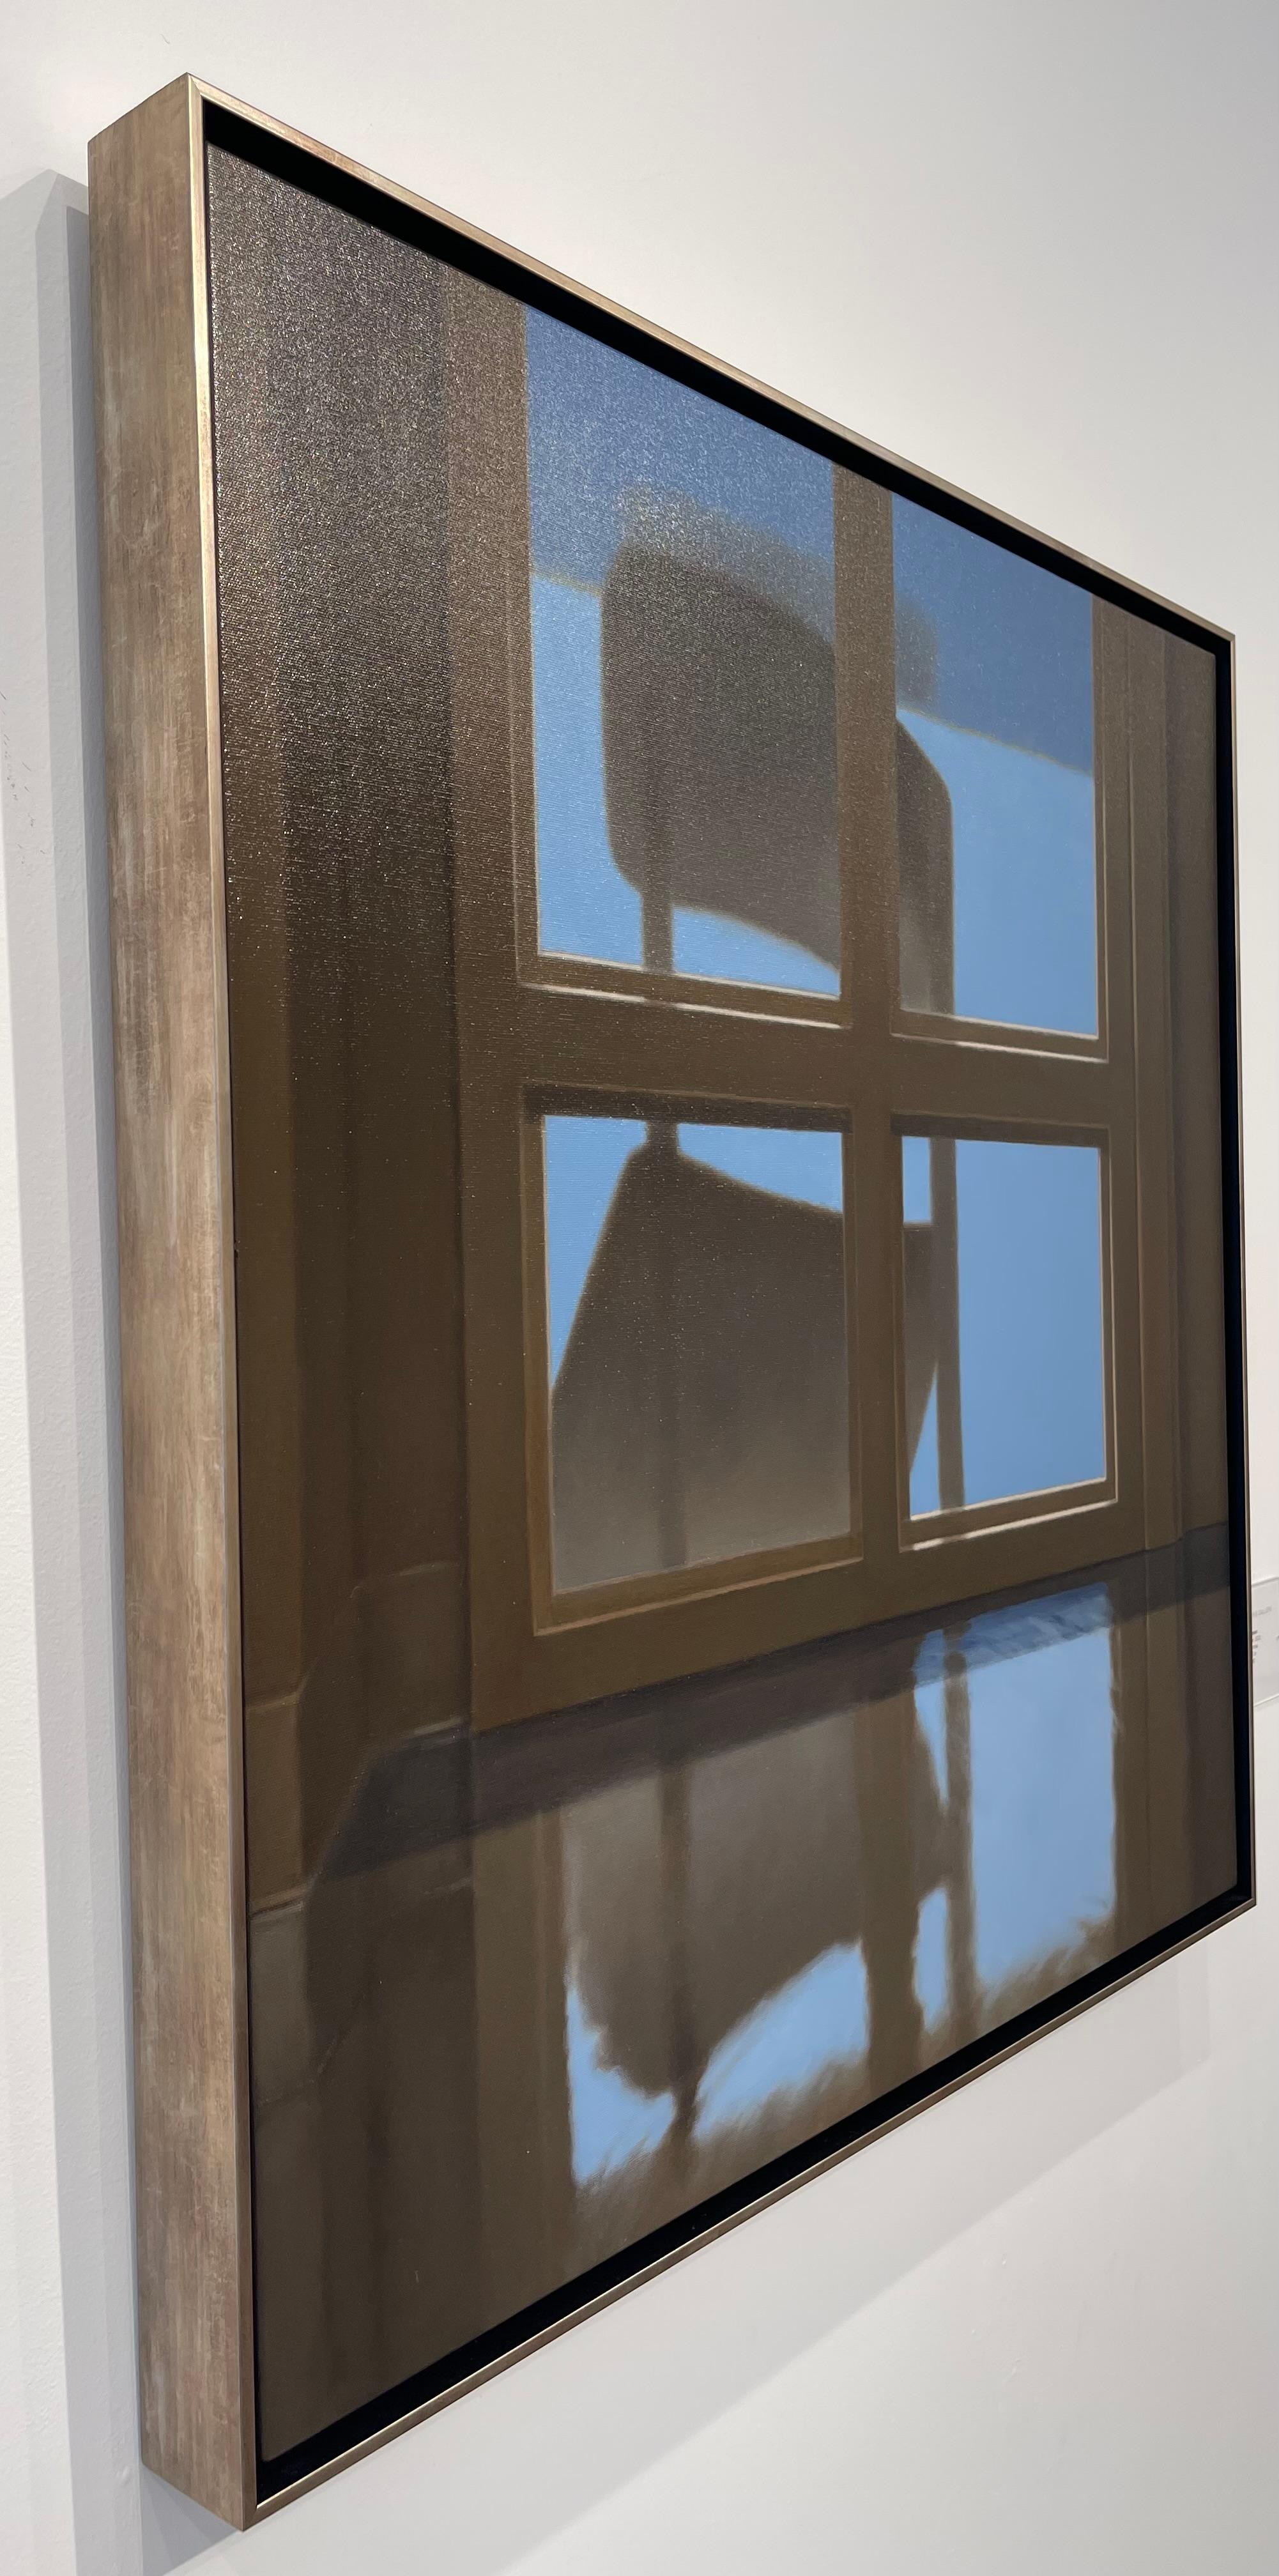 The Window - Photorealist Painting by Mimi Jensen